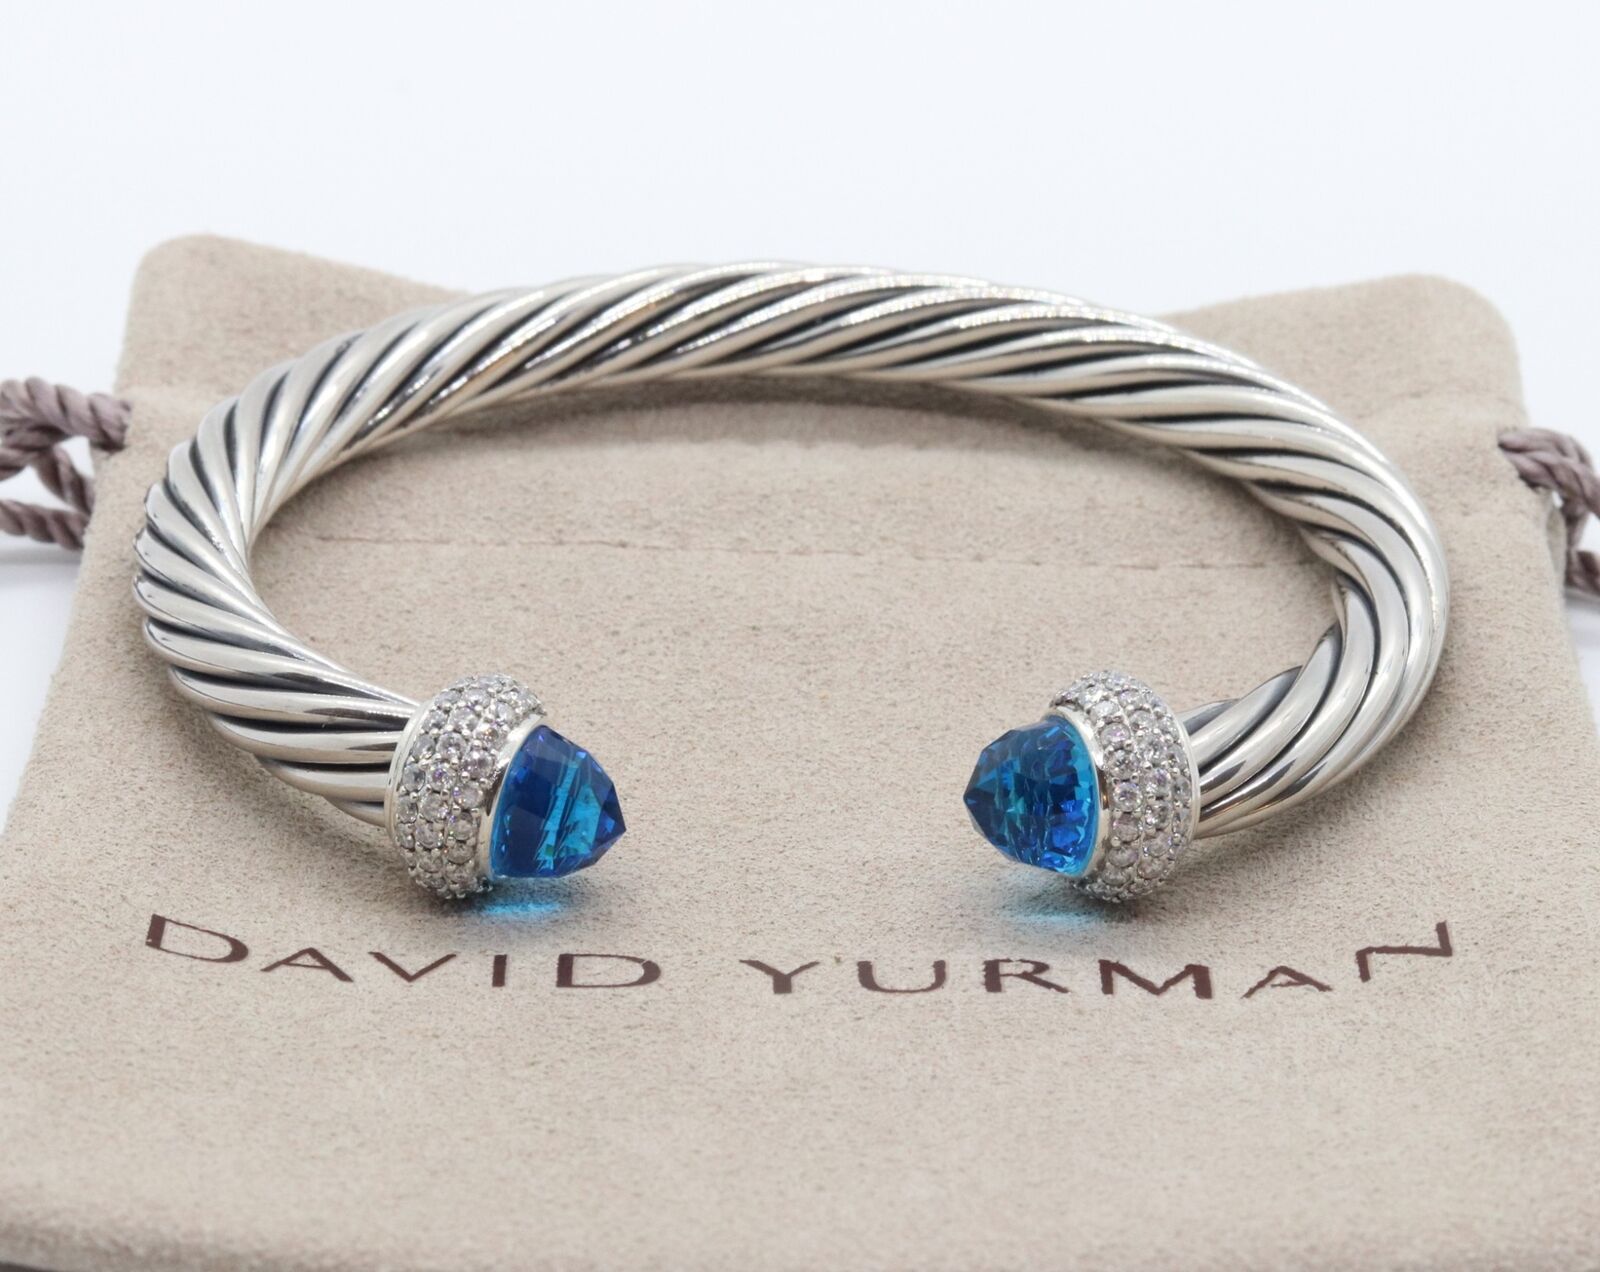 David Yurman Women's Silver 7mm Cable Candy Bracelet Blue Topaz with Diamonds